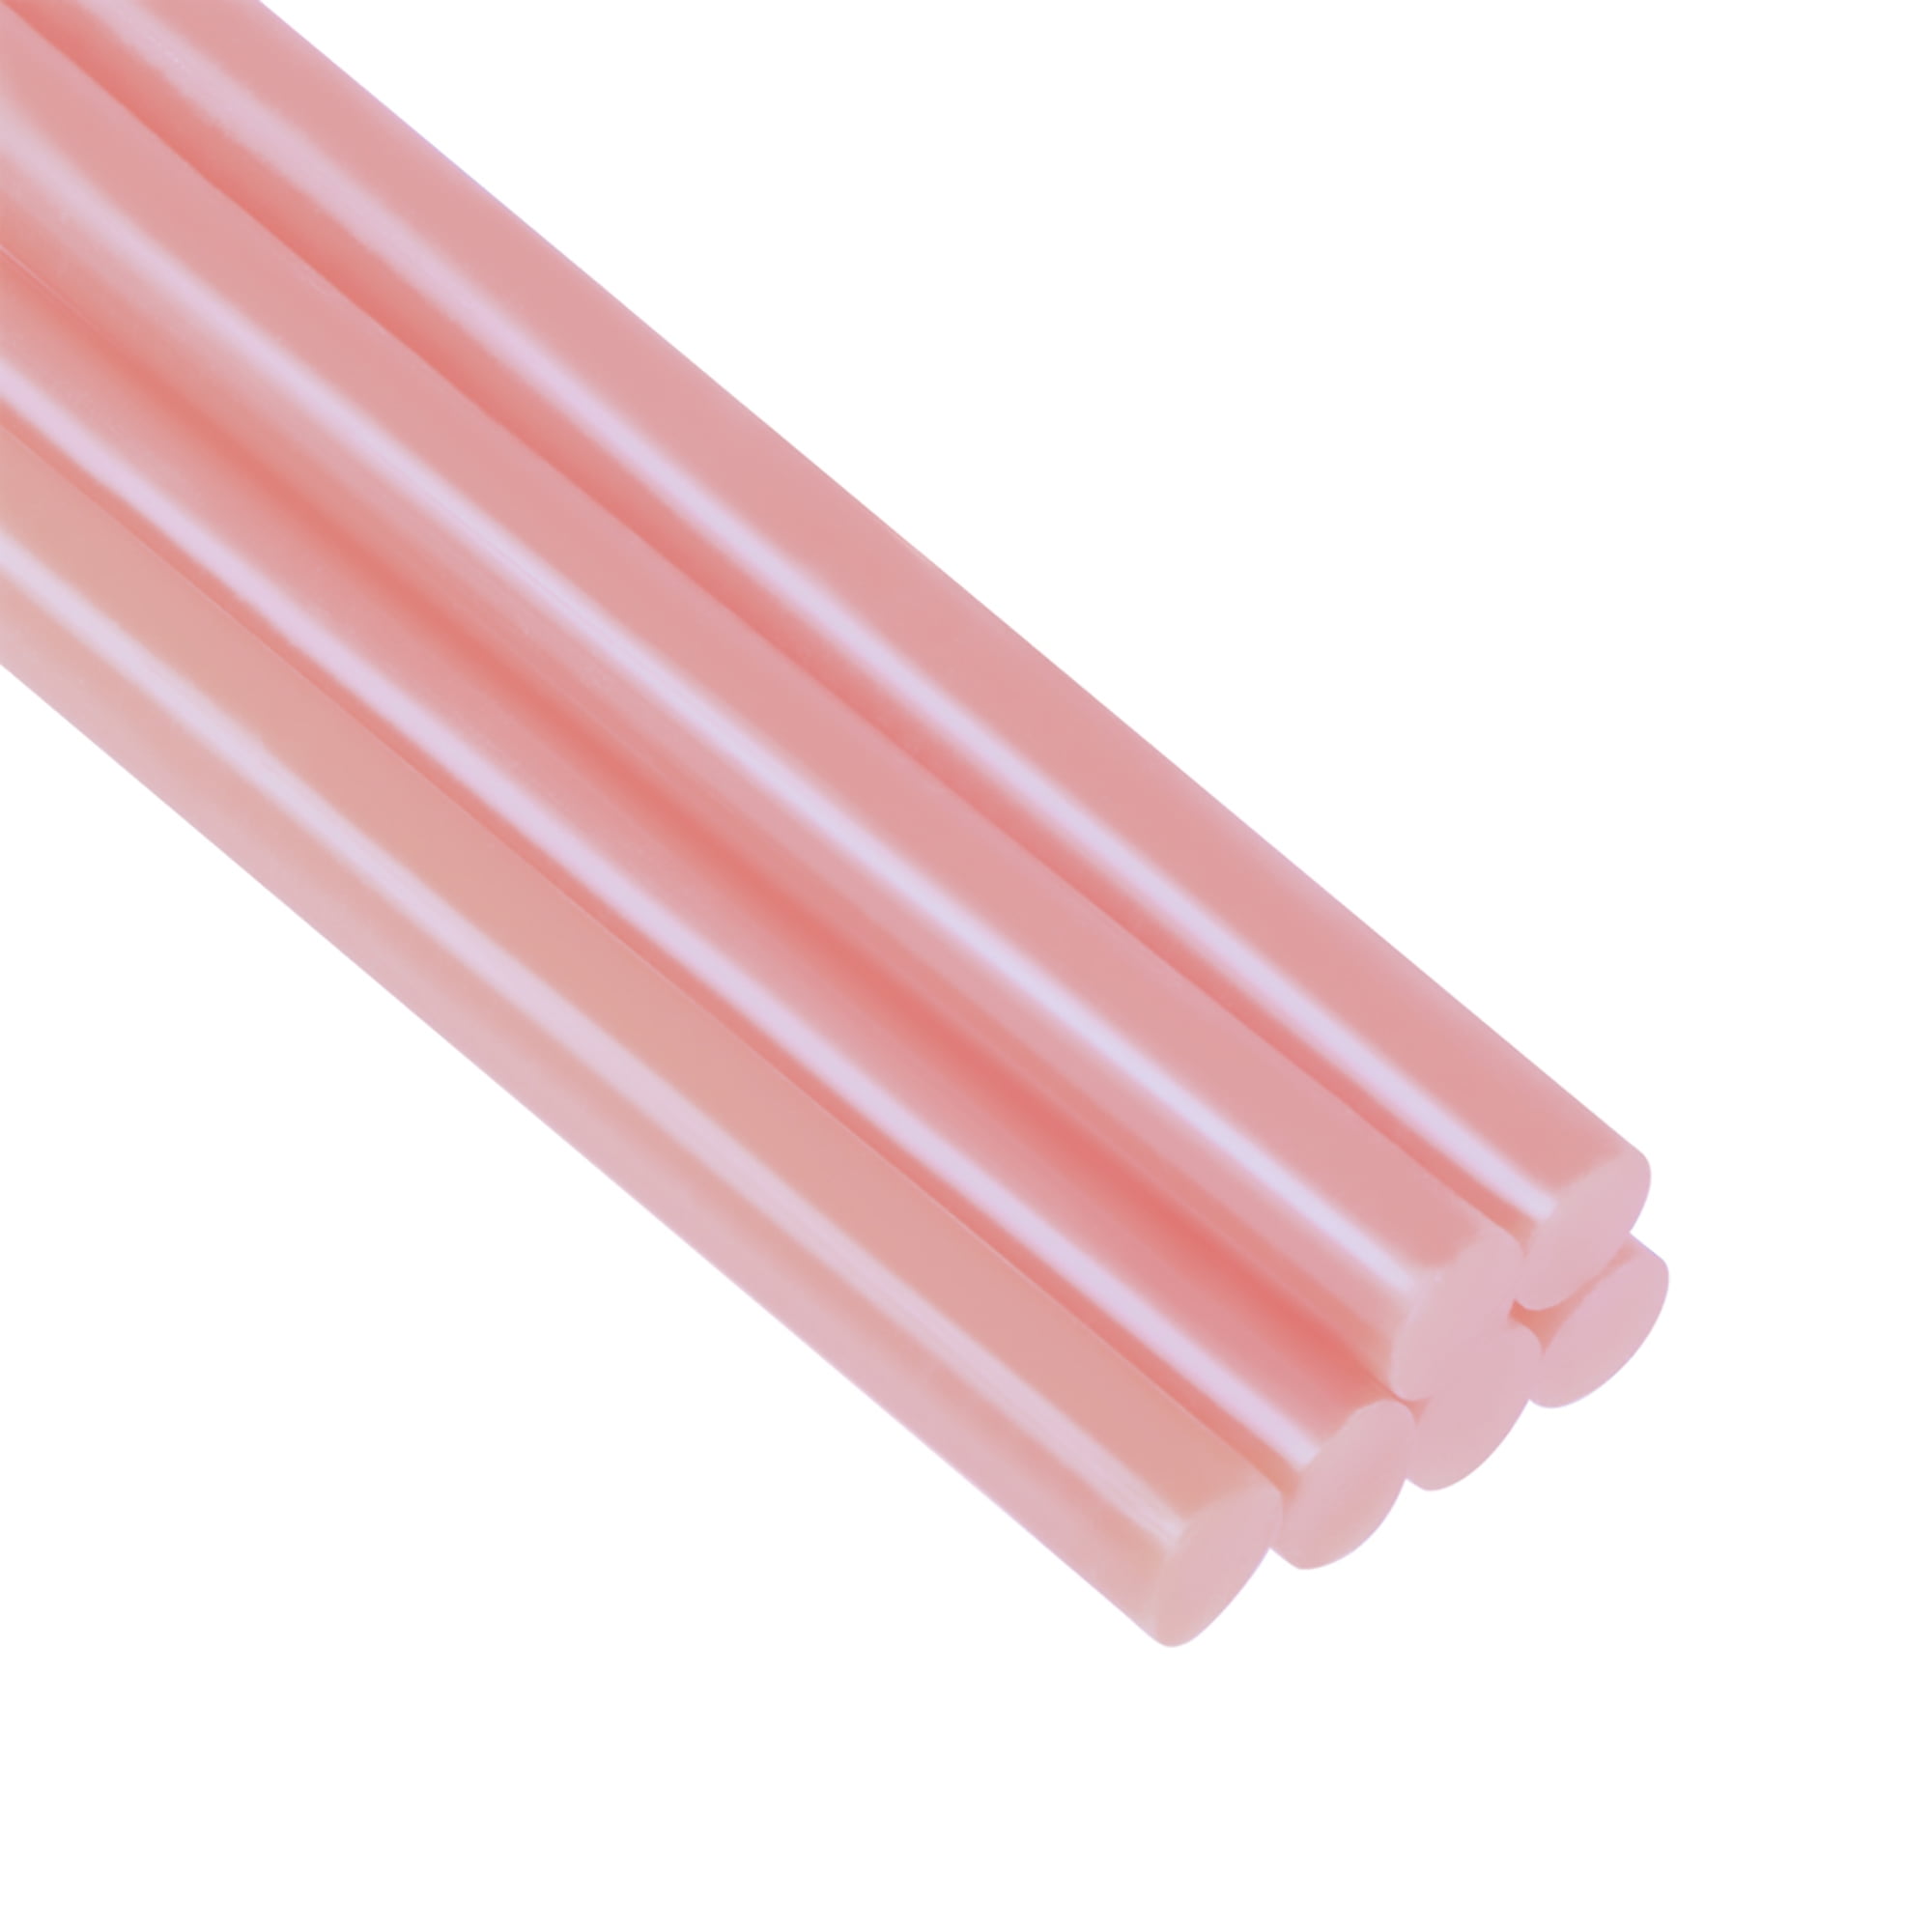 Color Hot Glue Sticks For Mini Glue Gun - 5 Pack (Pick Your Color) - MyFPV